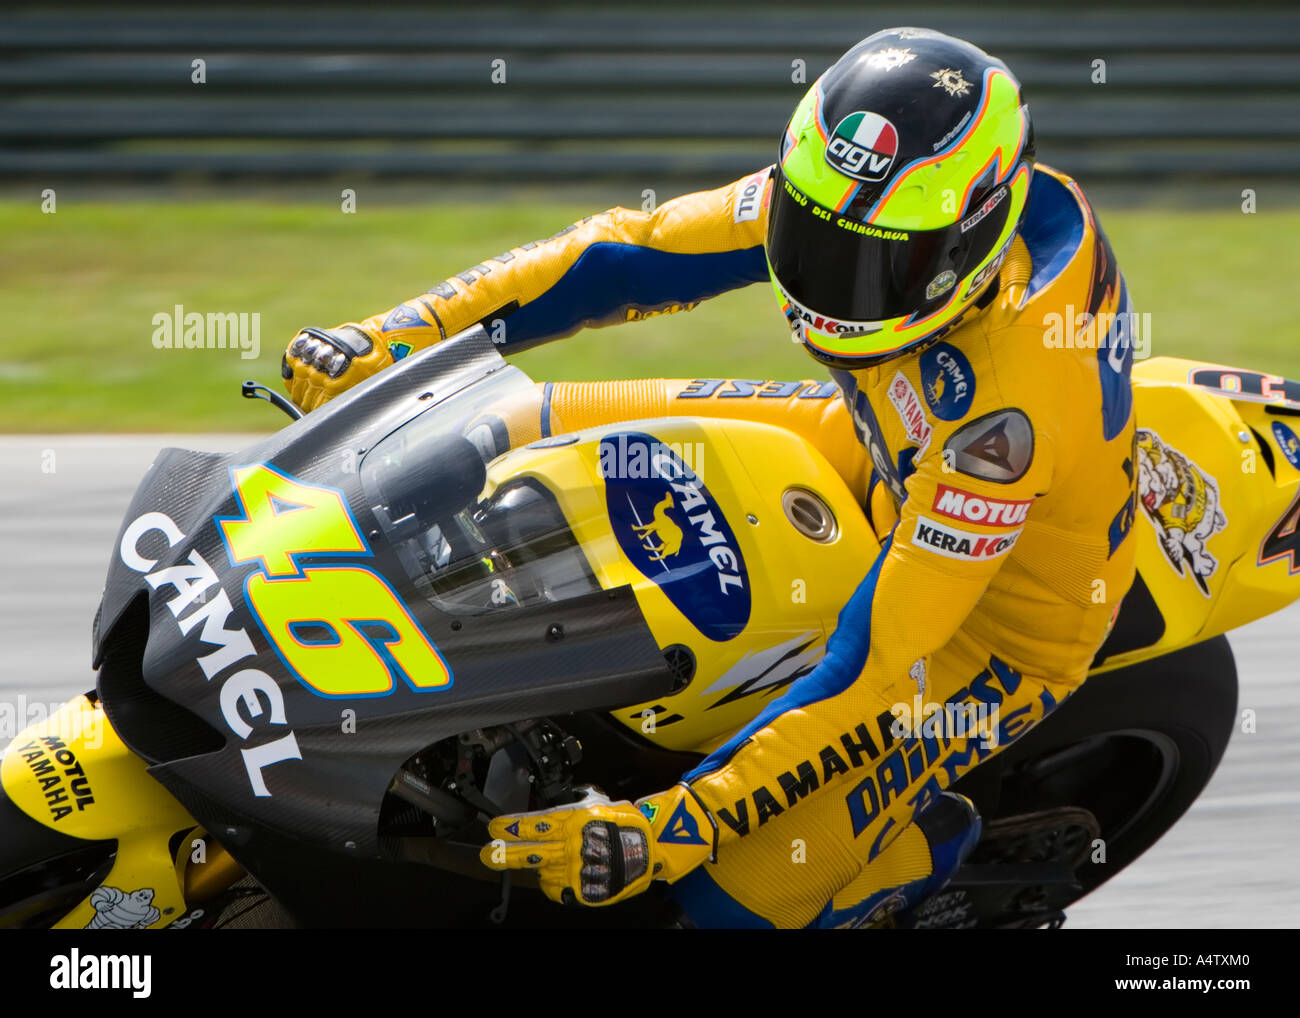 MotoGP World Champion Valentino Rossi cornering at the Sepang International  Circuit, Malaysia Stock Photo - Alamy